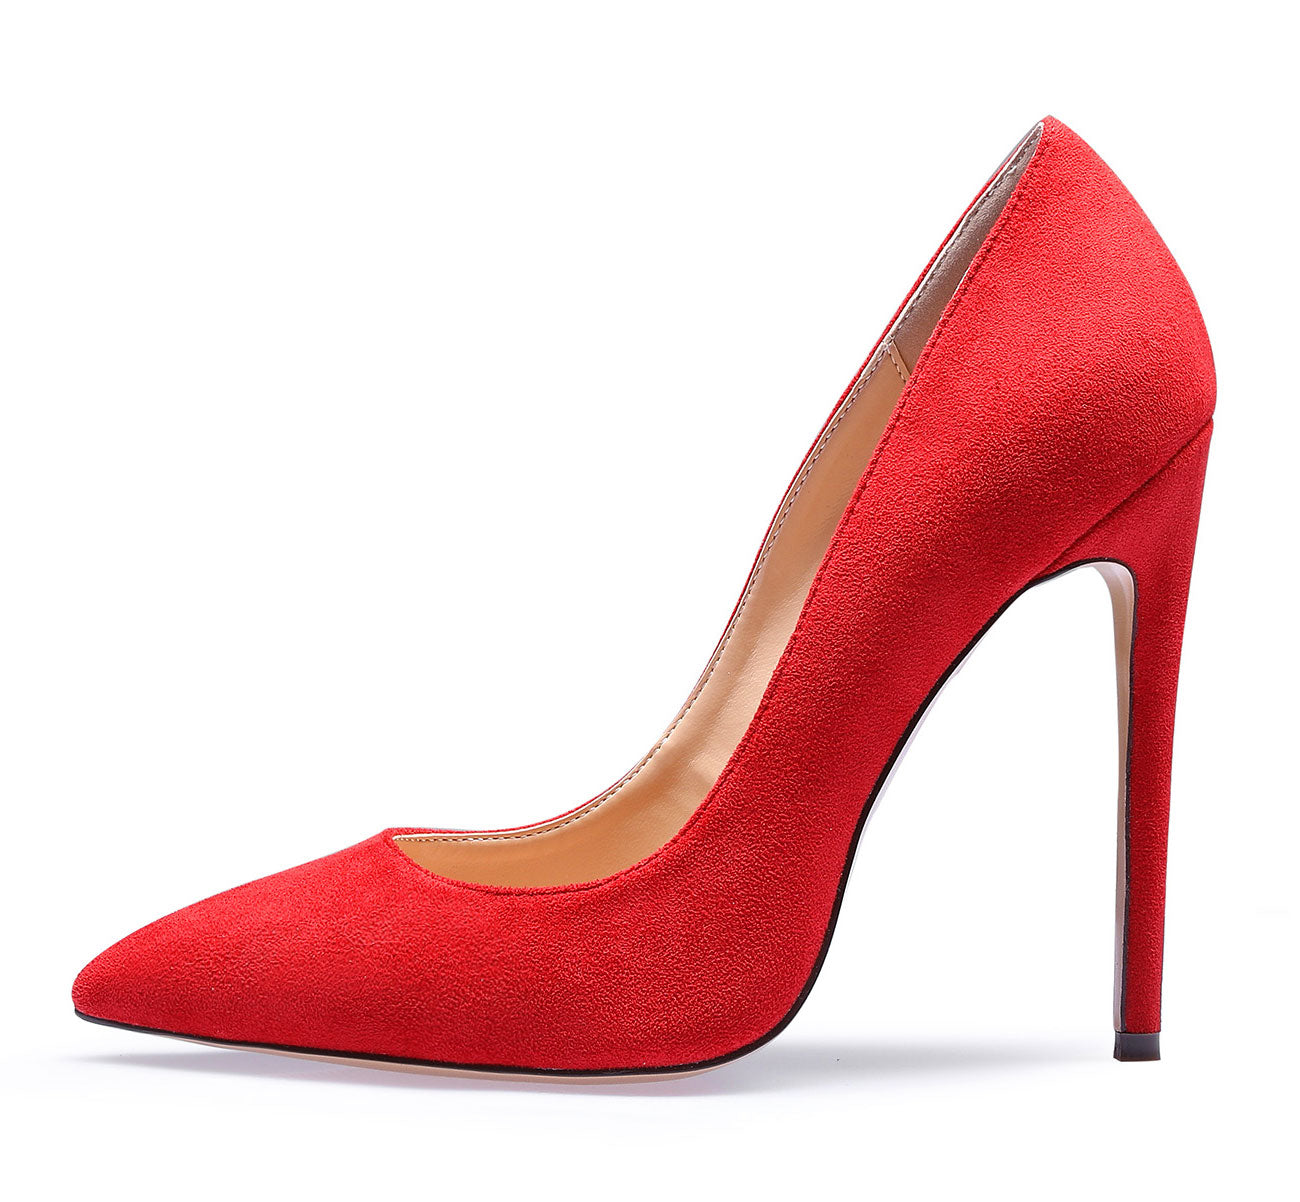 CASTAMERE Women's High Heels Slip On Pumps Pointy Toe Stilettos 12CM Suede Shoes